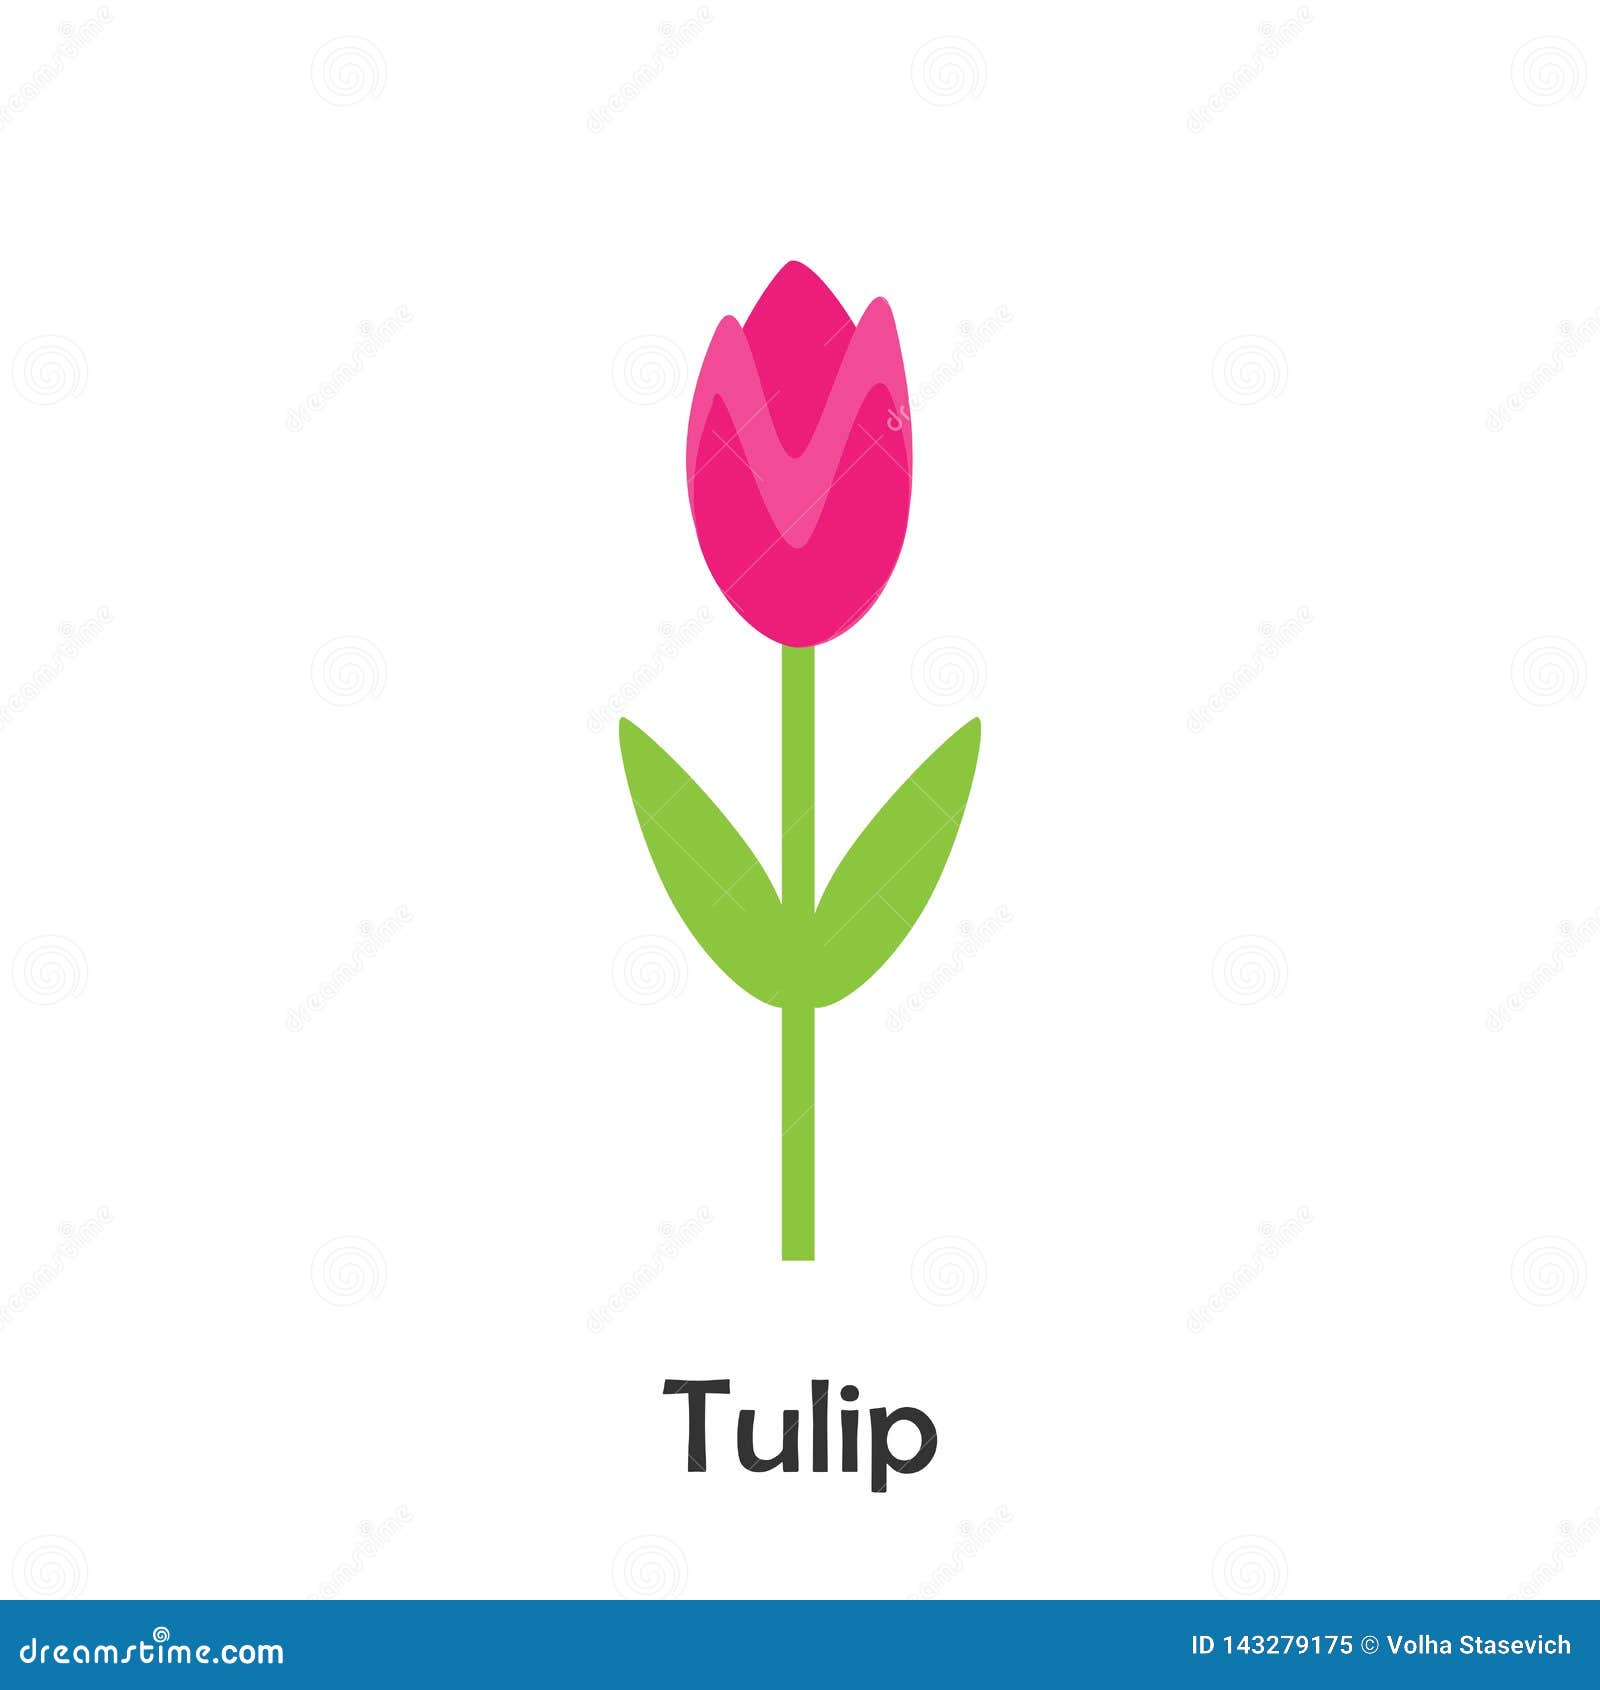 Tulip In Cartoon Style Spring Card For Kid Preschool Activity For Children Vector Illustration Stock Illustration Illustration Of Abstract Game 143279175